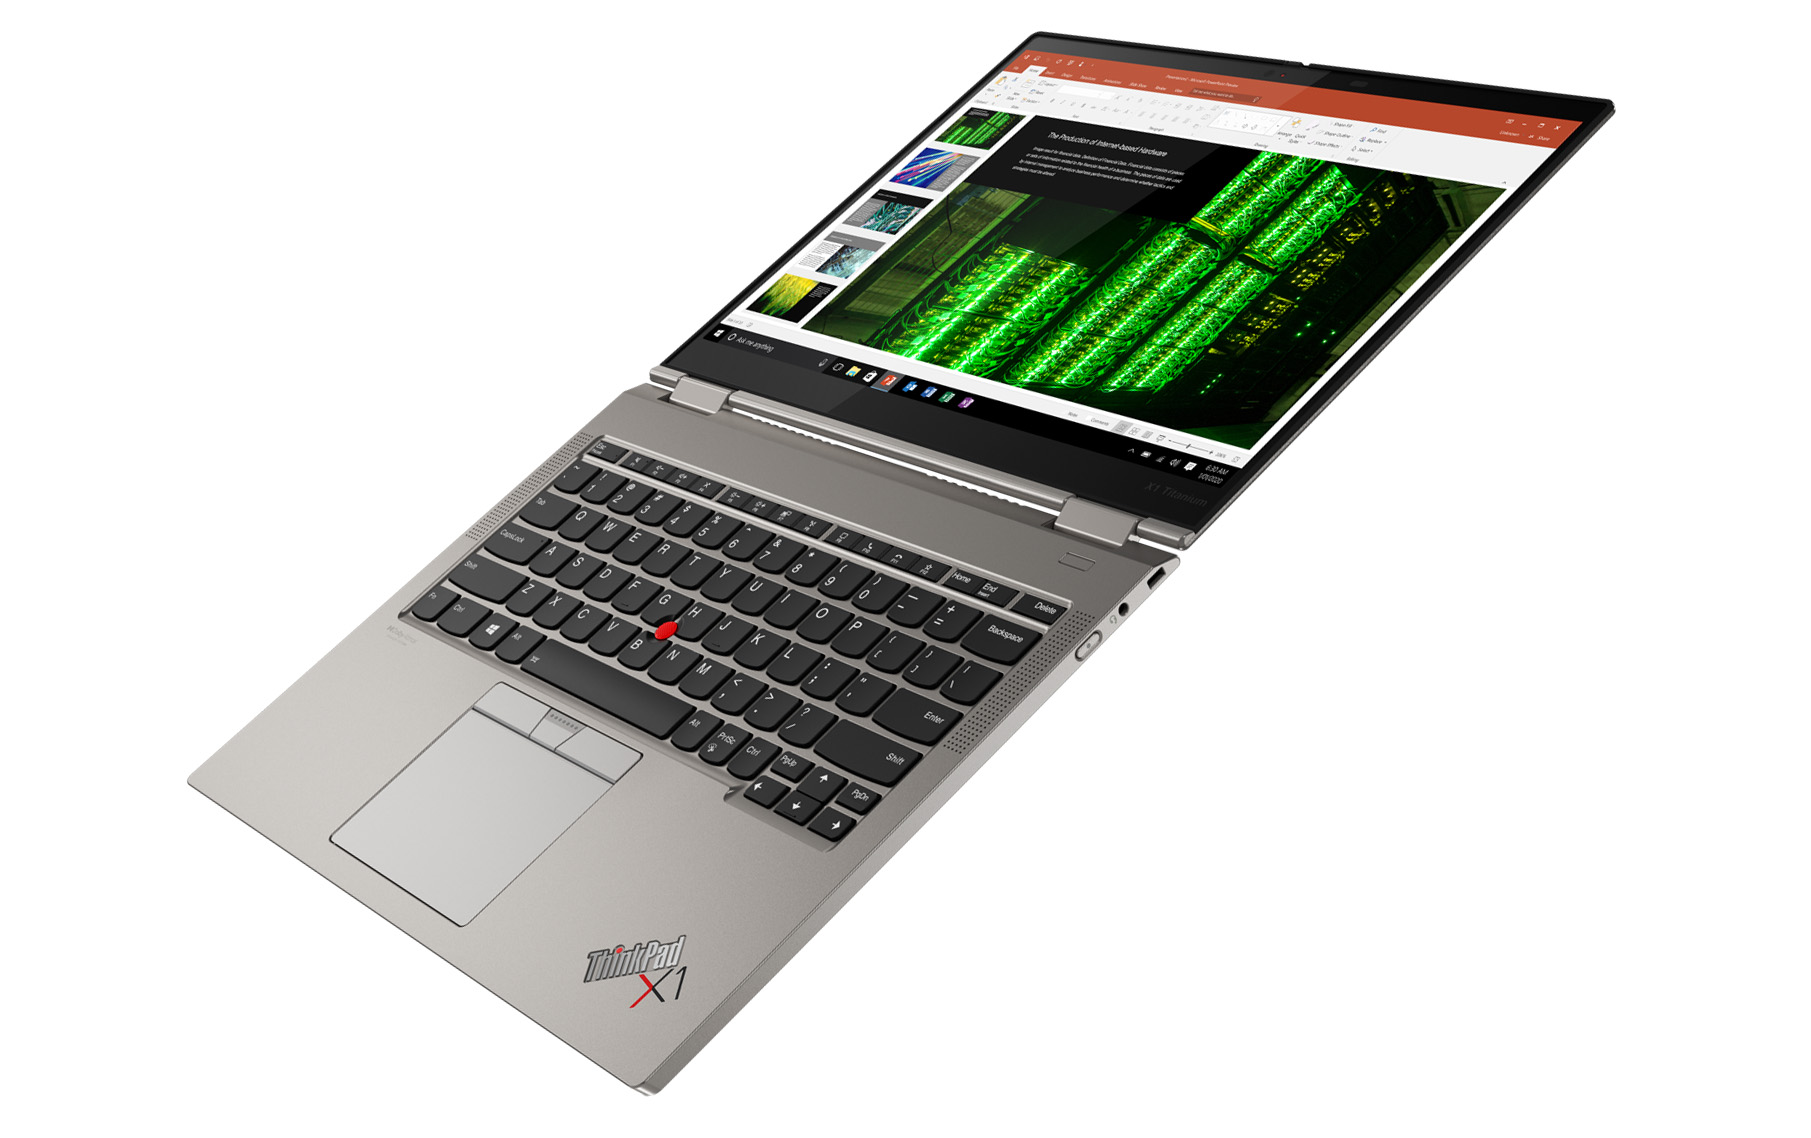 Lenovo's new Titanium Yoga laptop will feature Sensel's force-sensing tech